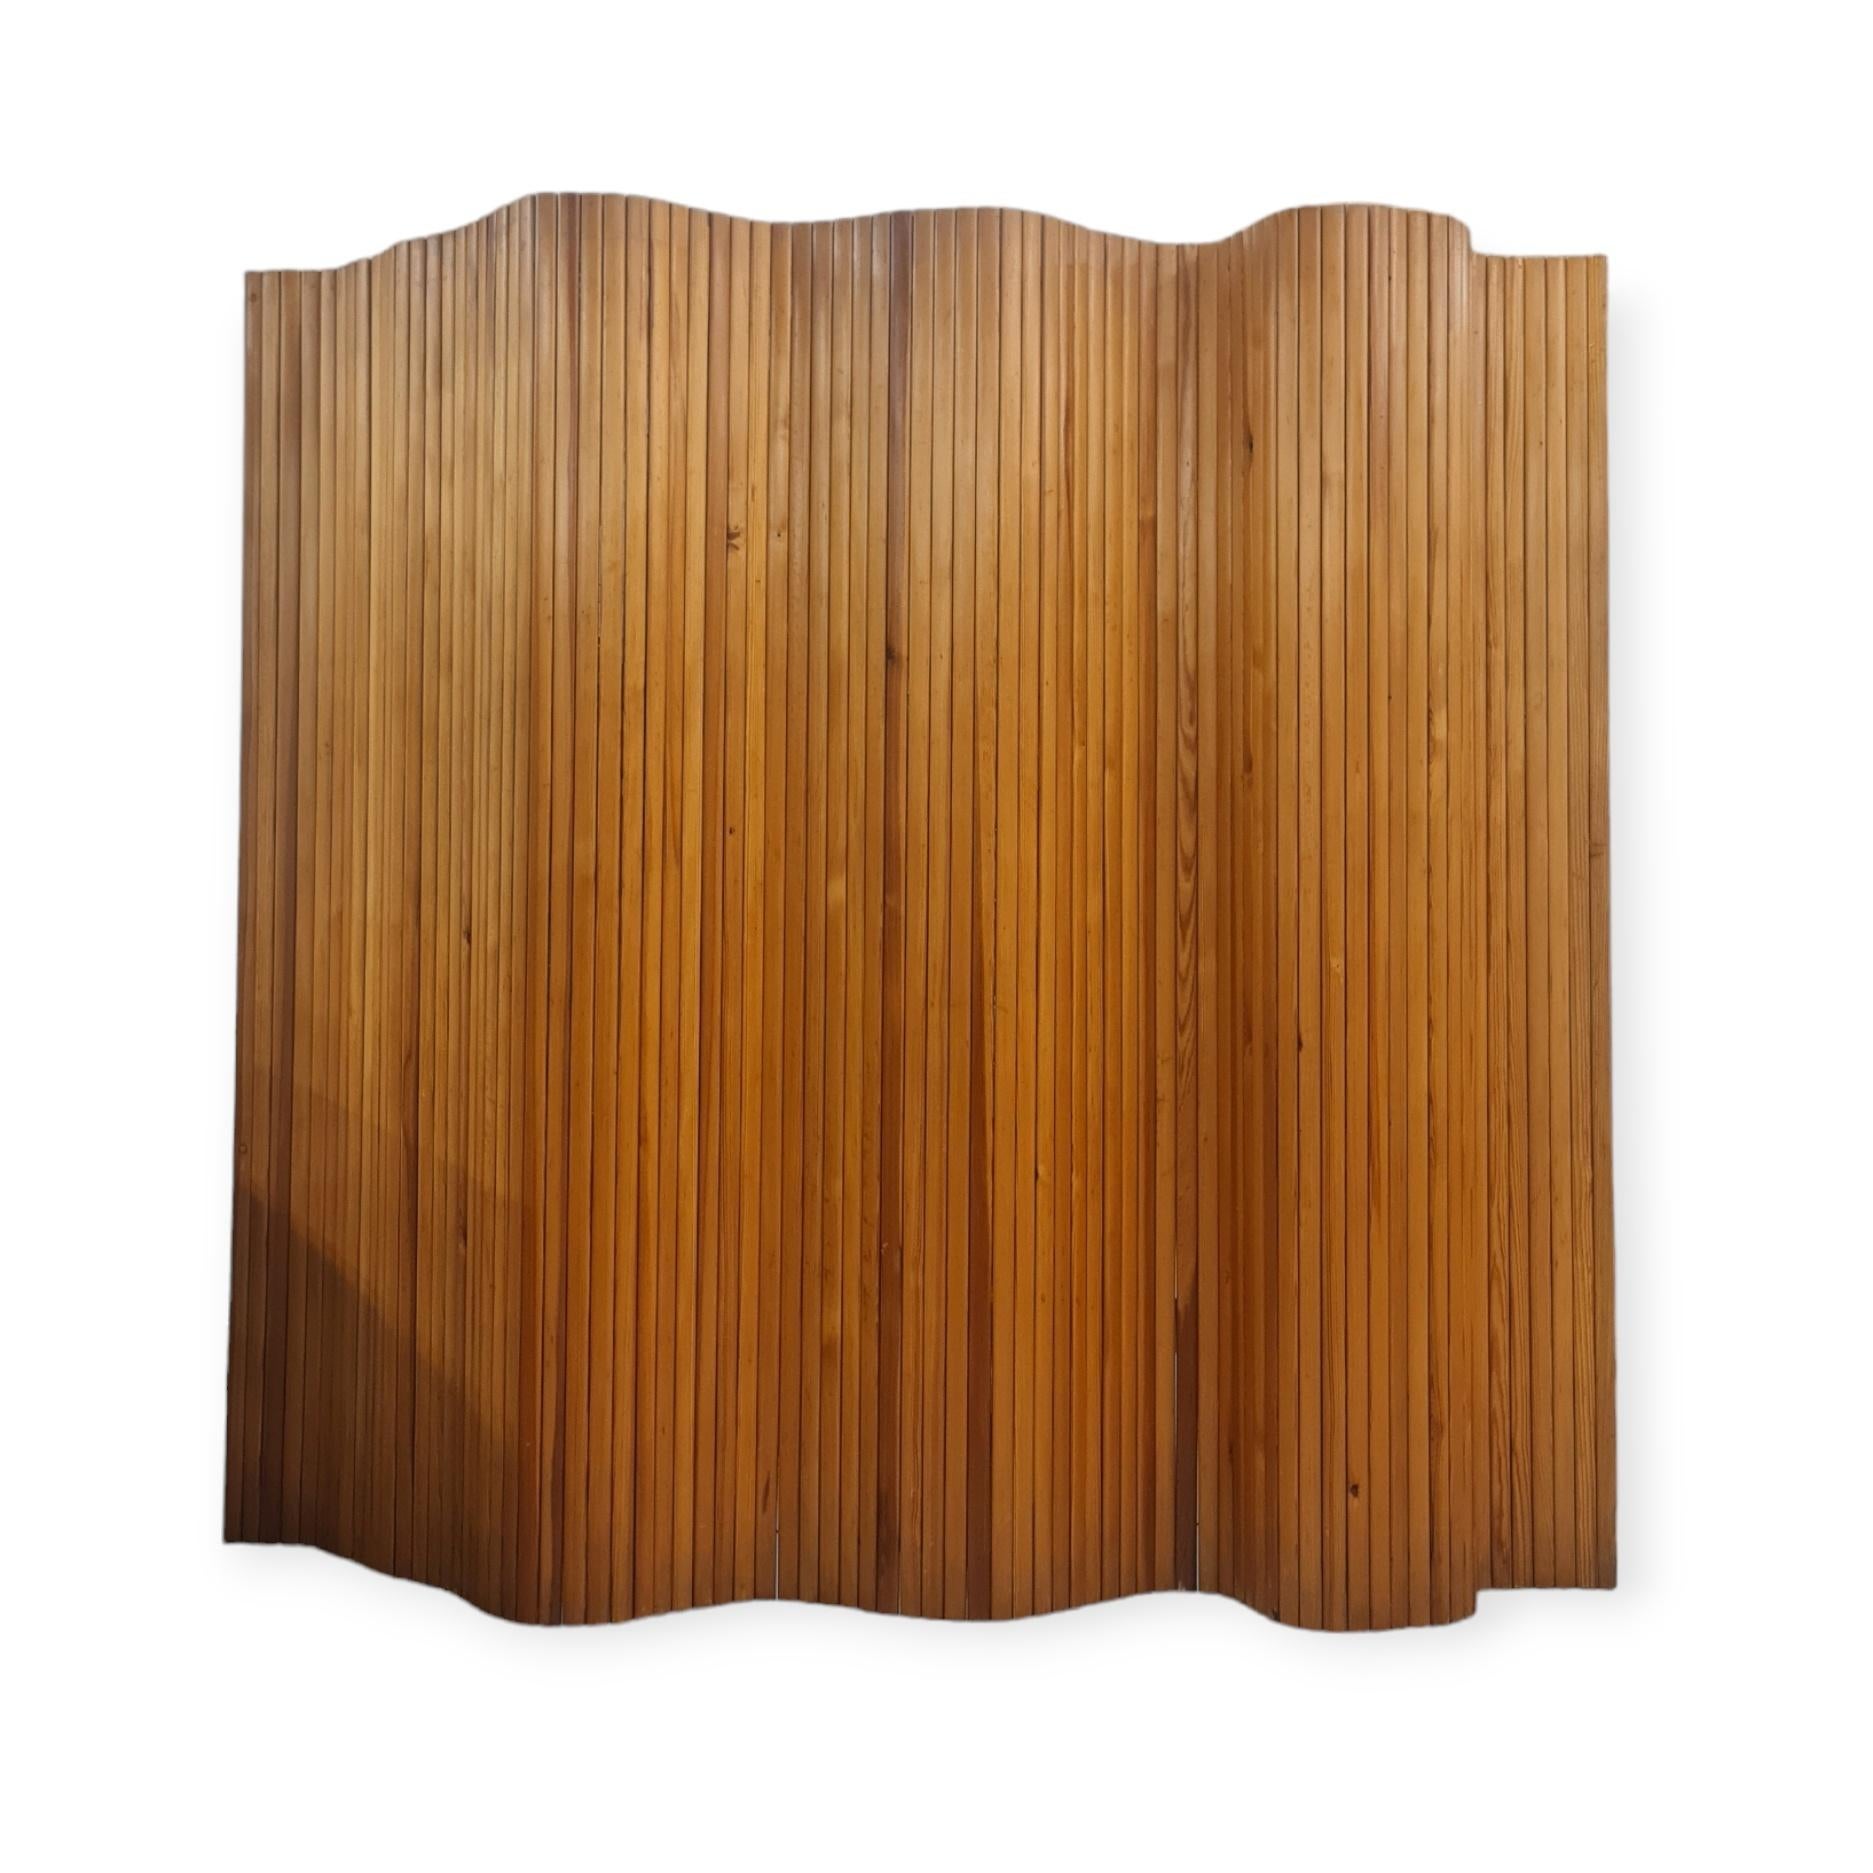 Alvar Aalto, Wooden Room Divider, Late 1960s, Artek In Good Condition For Sale In Helsinki, FI